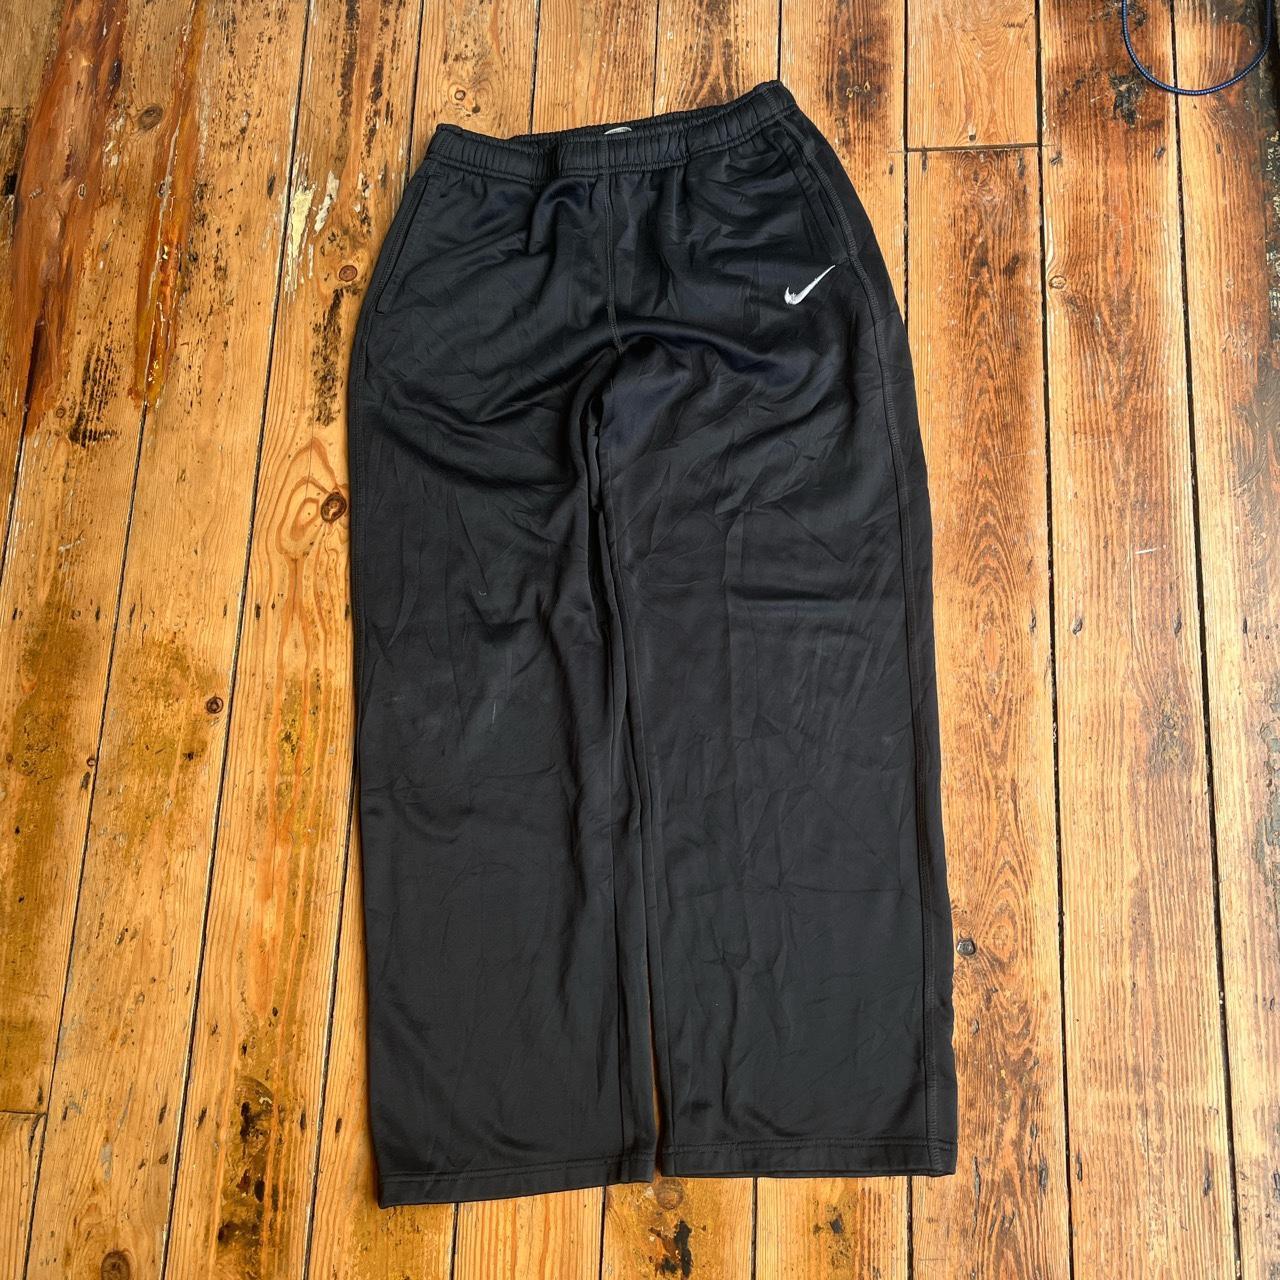 Sick vintage baggy Nike joggers in black with grey... - Depop